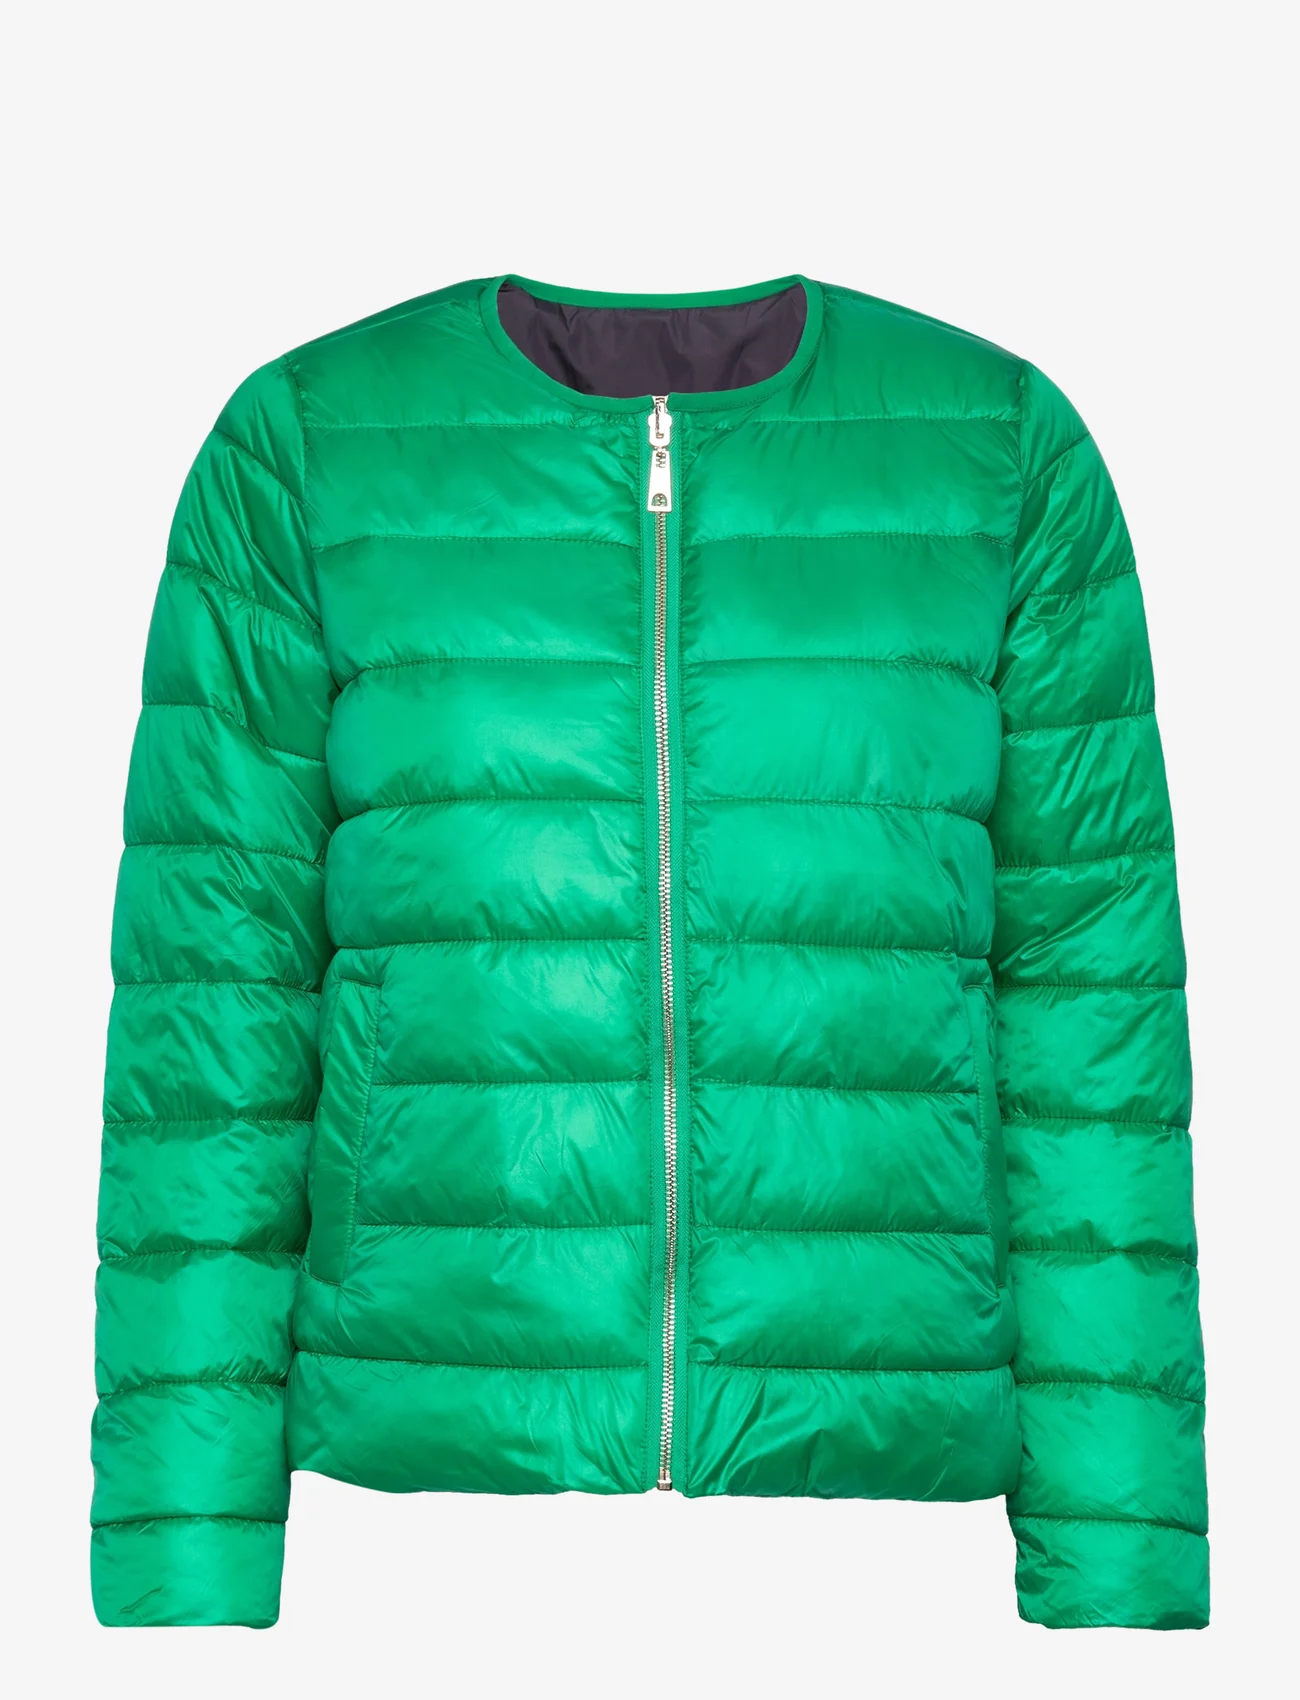 Coster Copenhagen - CC Heart EMMA reversable quilted ja - spring jackets - emerald green - 0